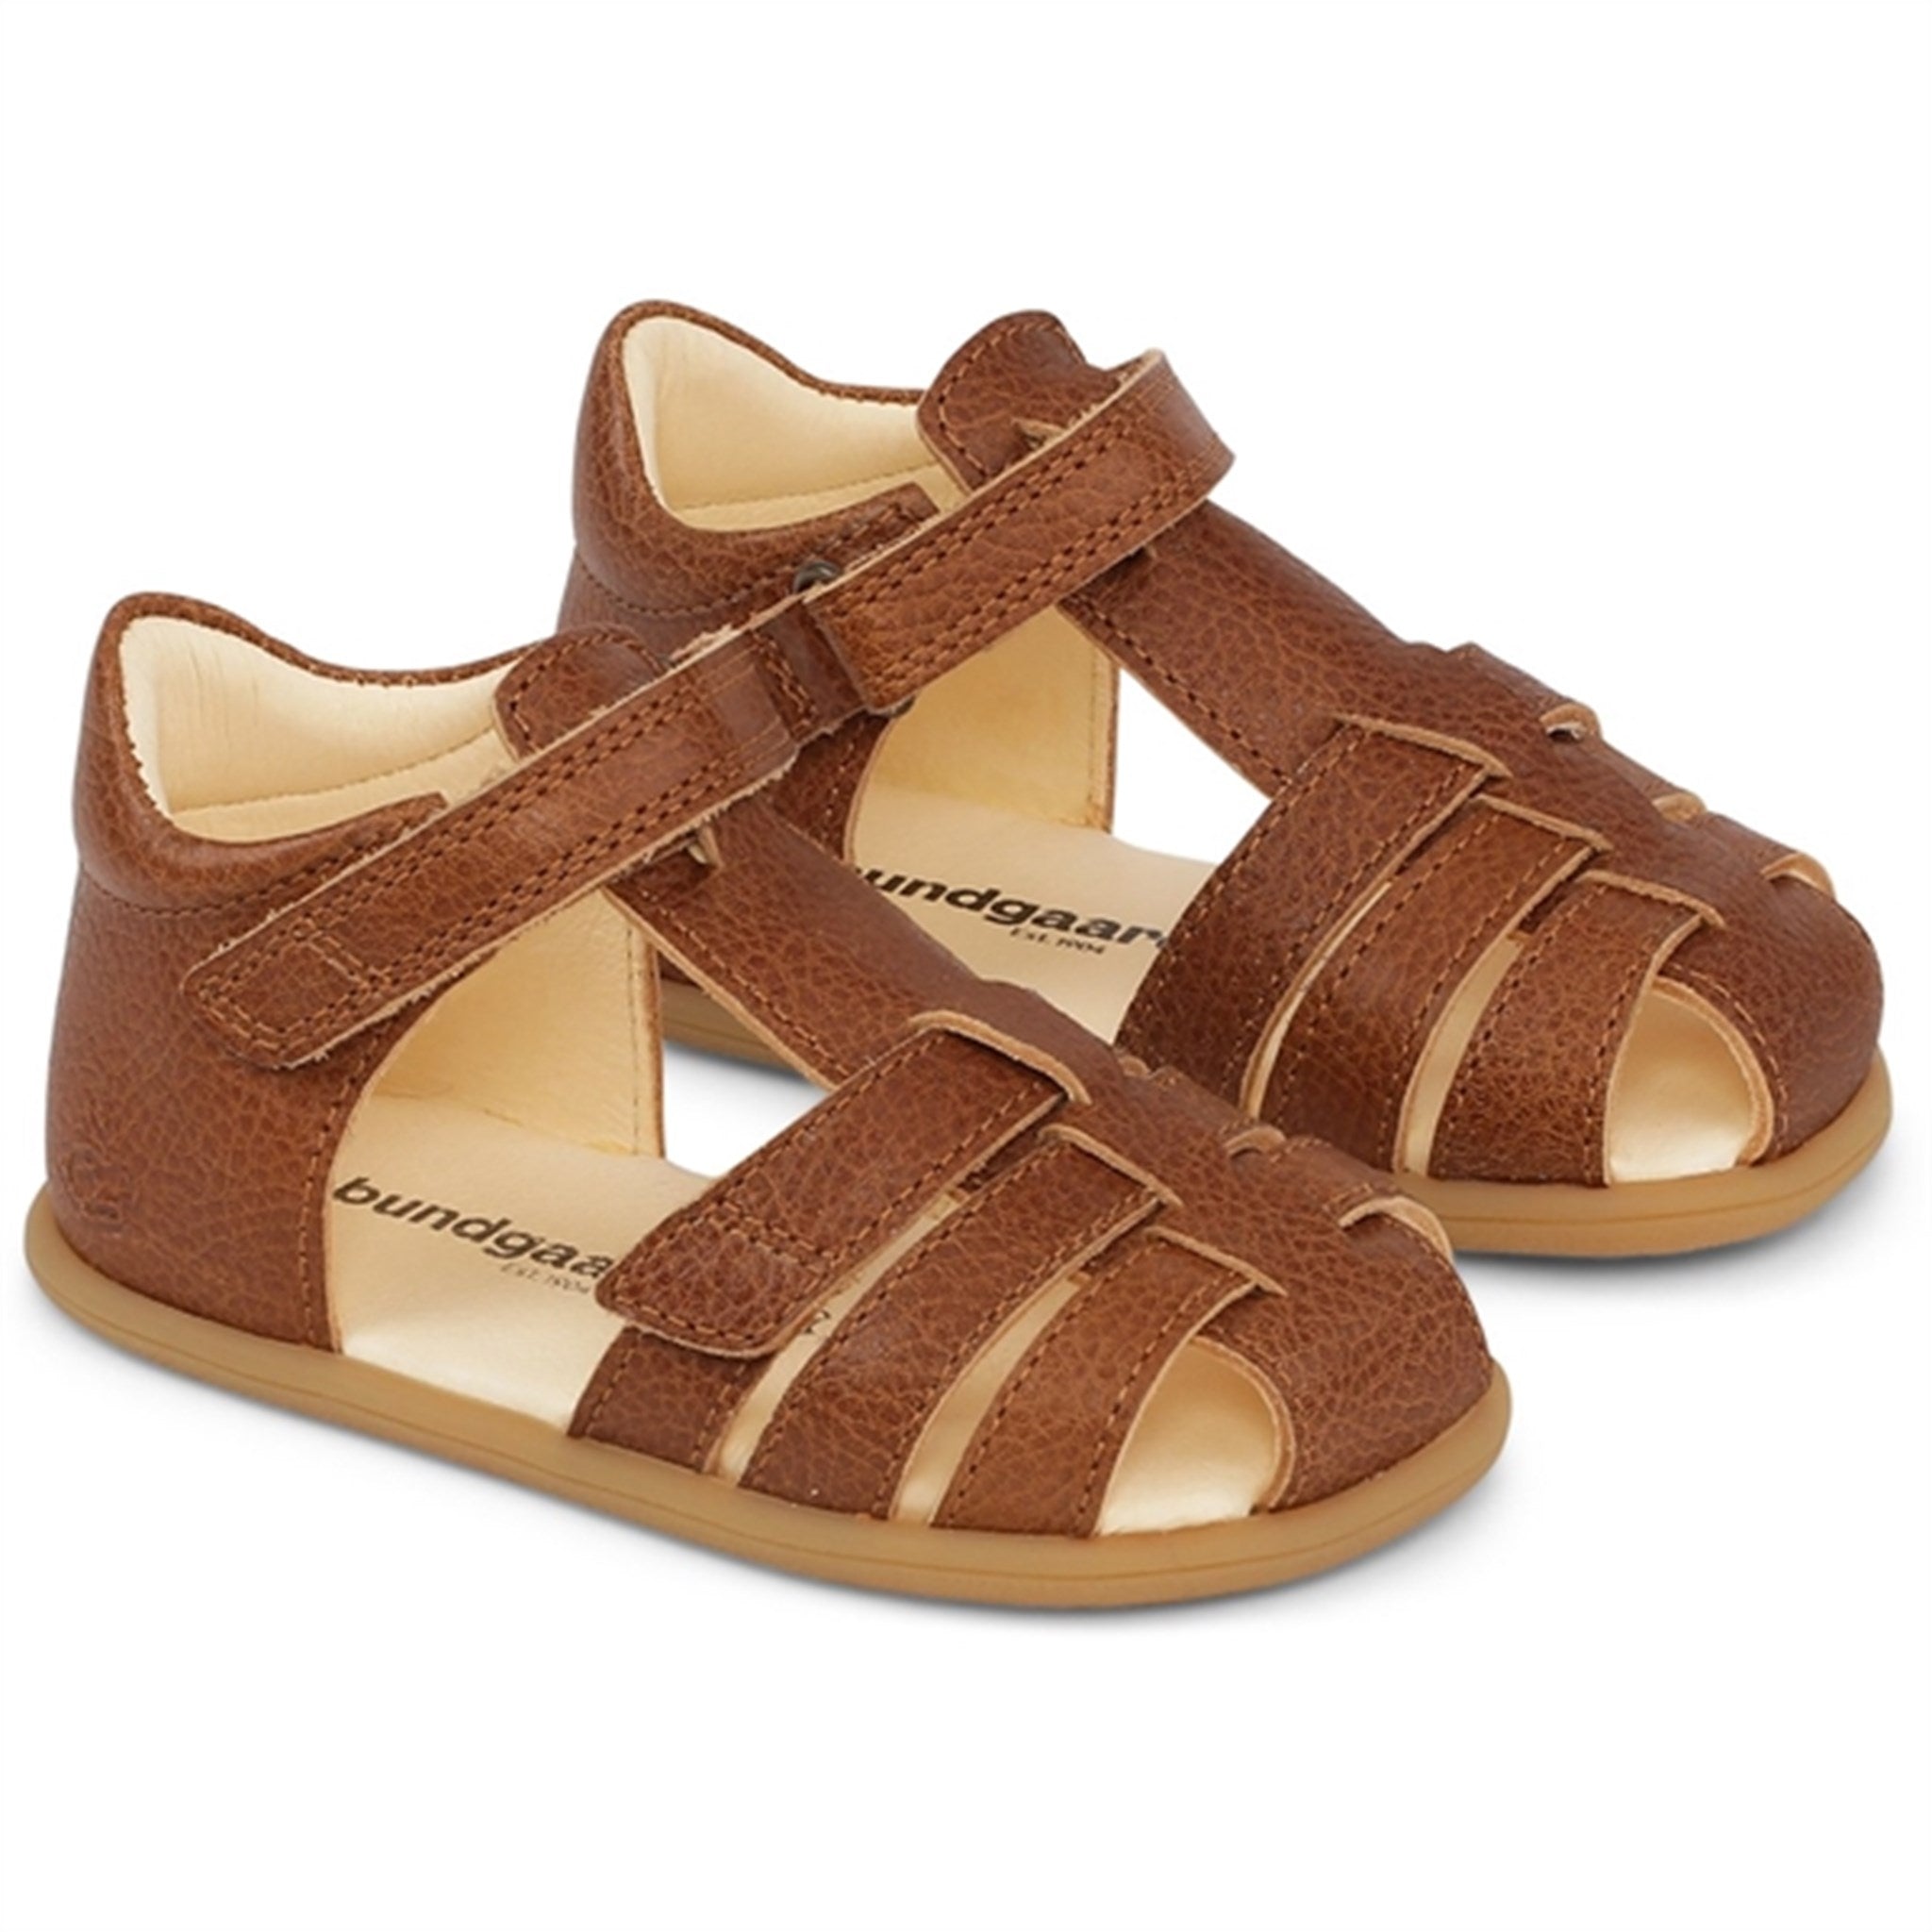 Bundgaard Rox III Sandal Tan G 2